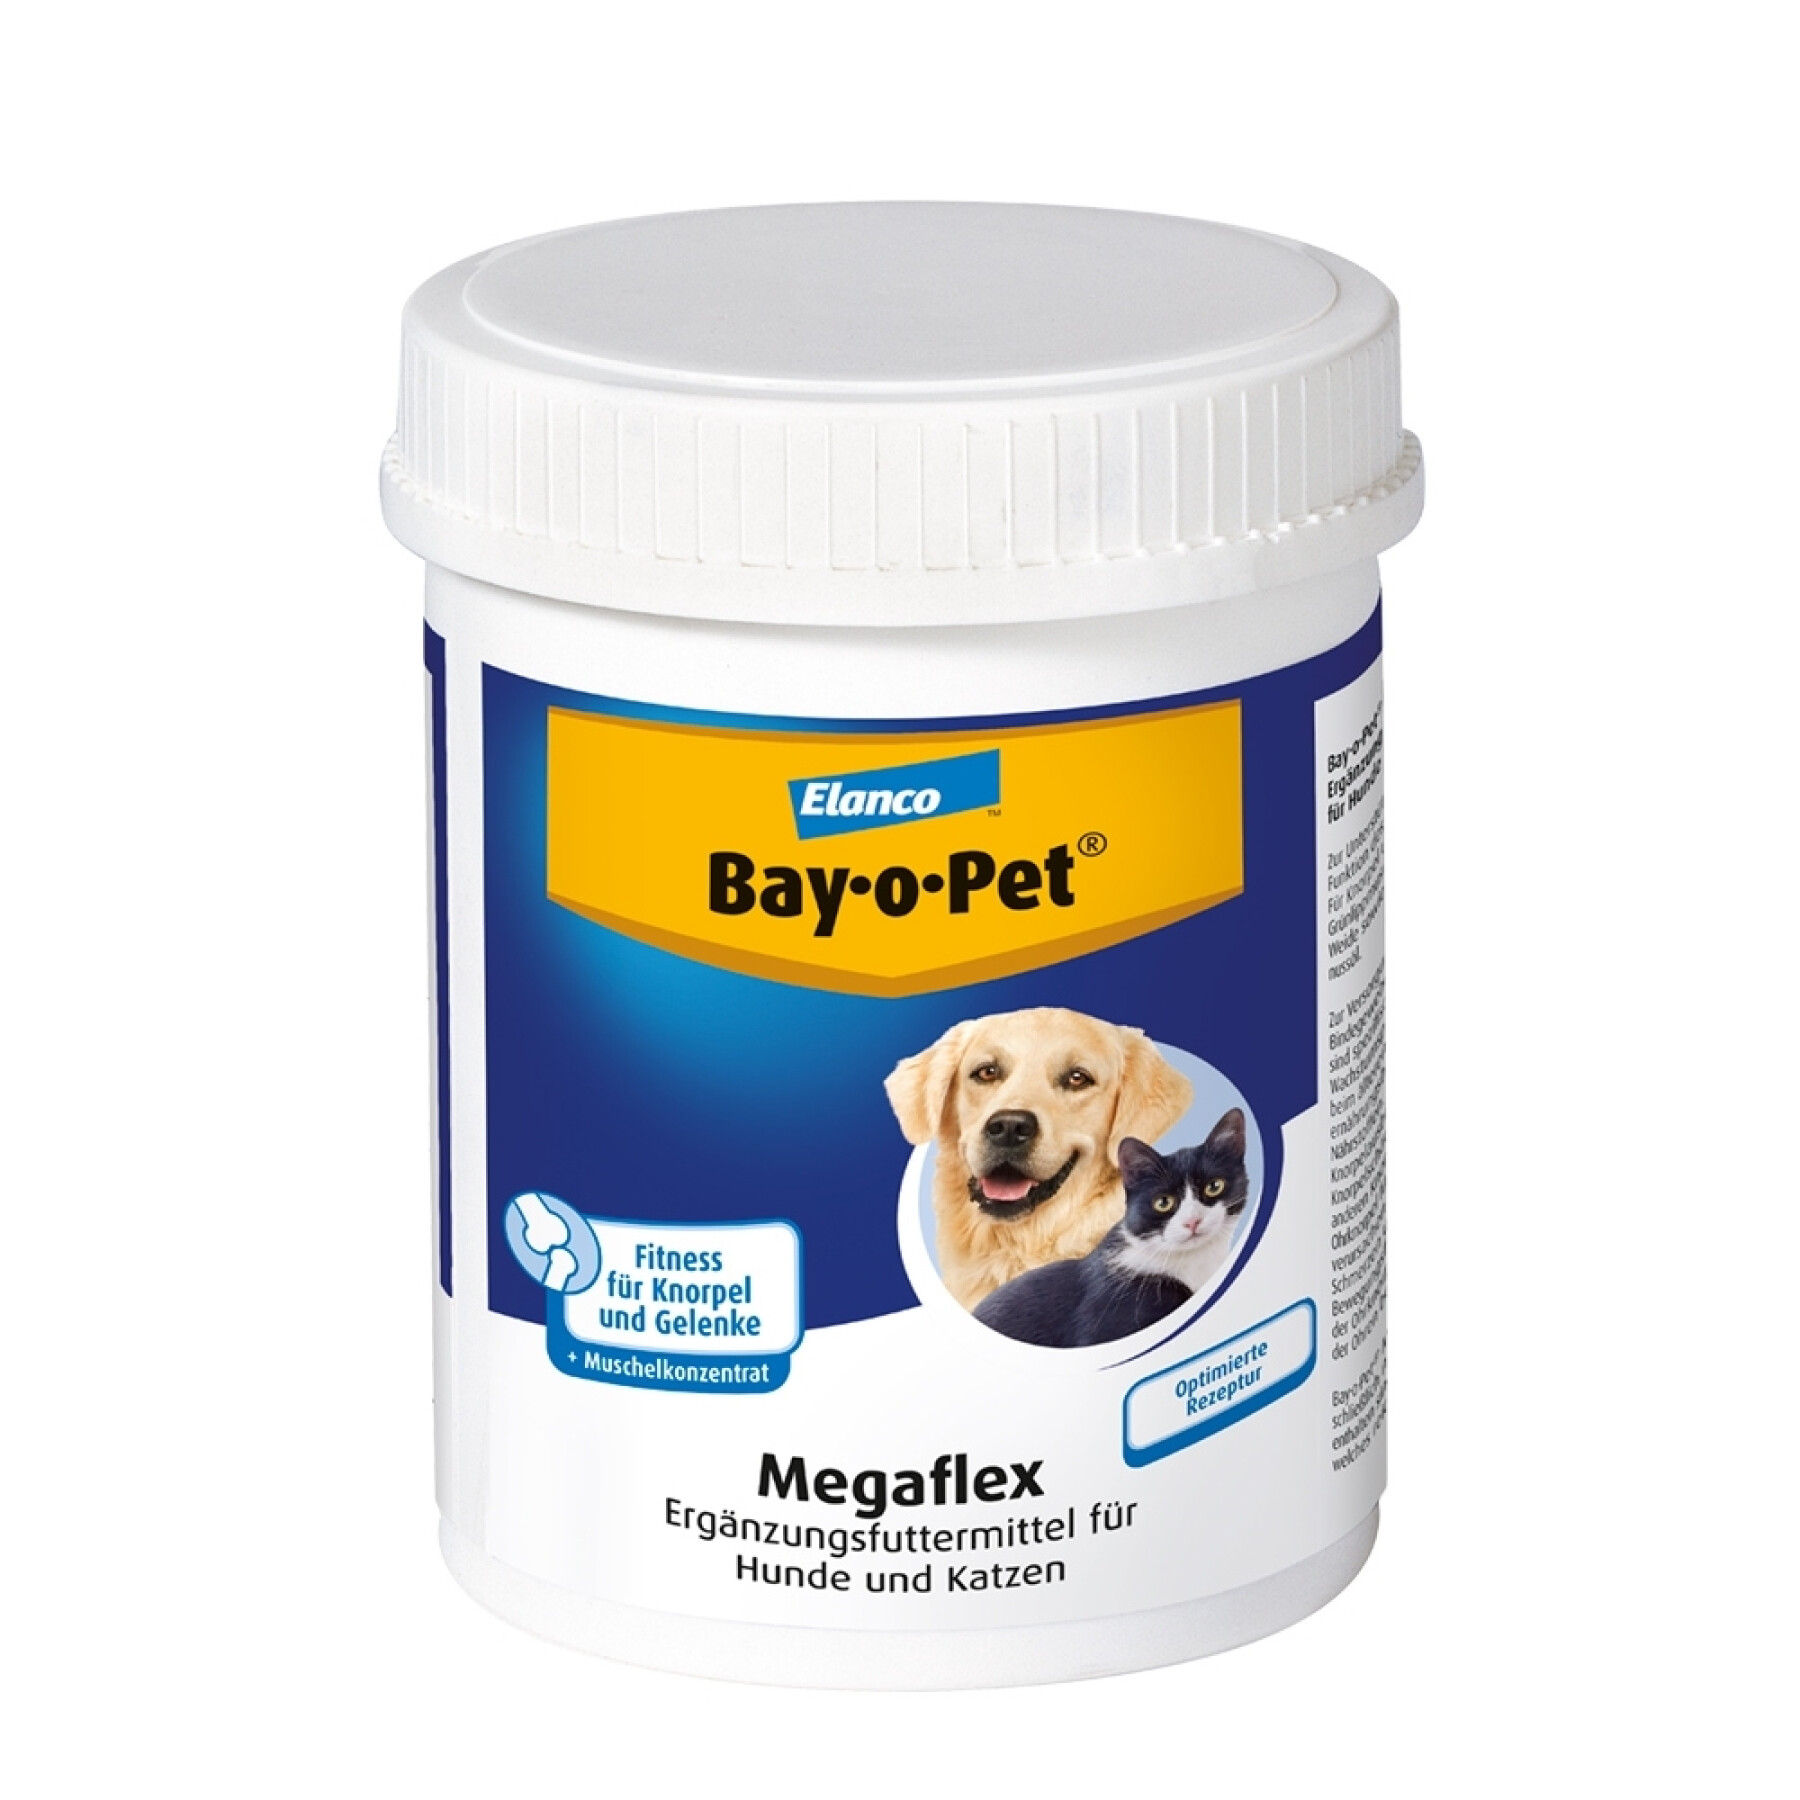 Powder food supplements for dogs Nobby Pet Bay-o-Pet Megaflex